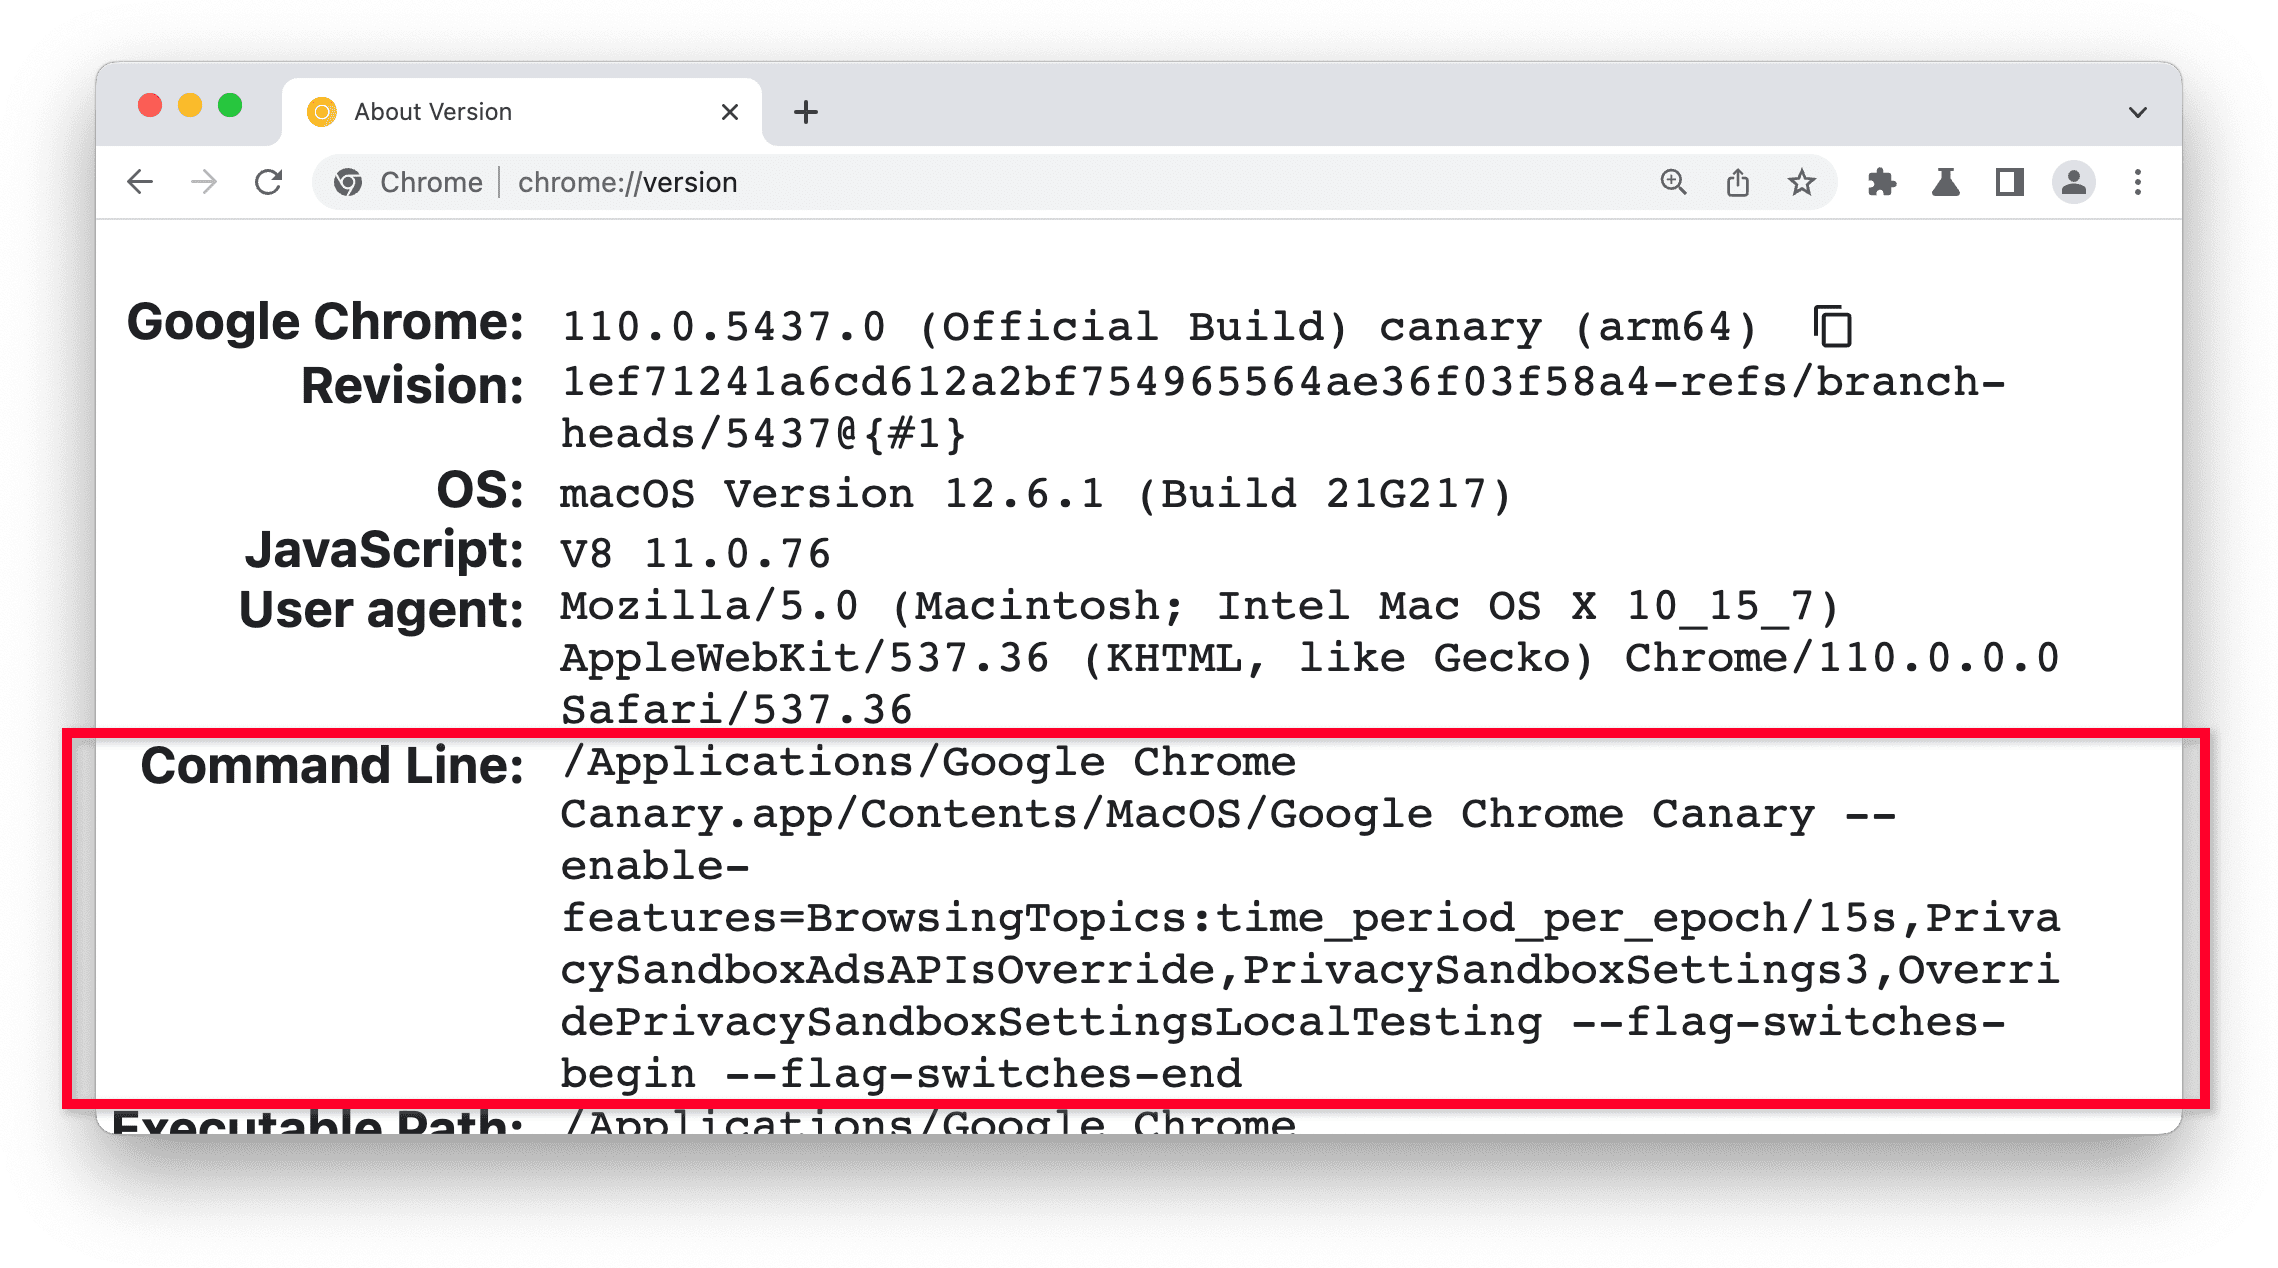 chrome://version ใน Chrome Canary
ที่ไฮไลต์ส่วนบรรทัดคำสั่ง